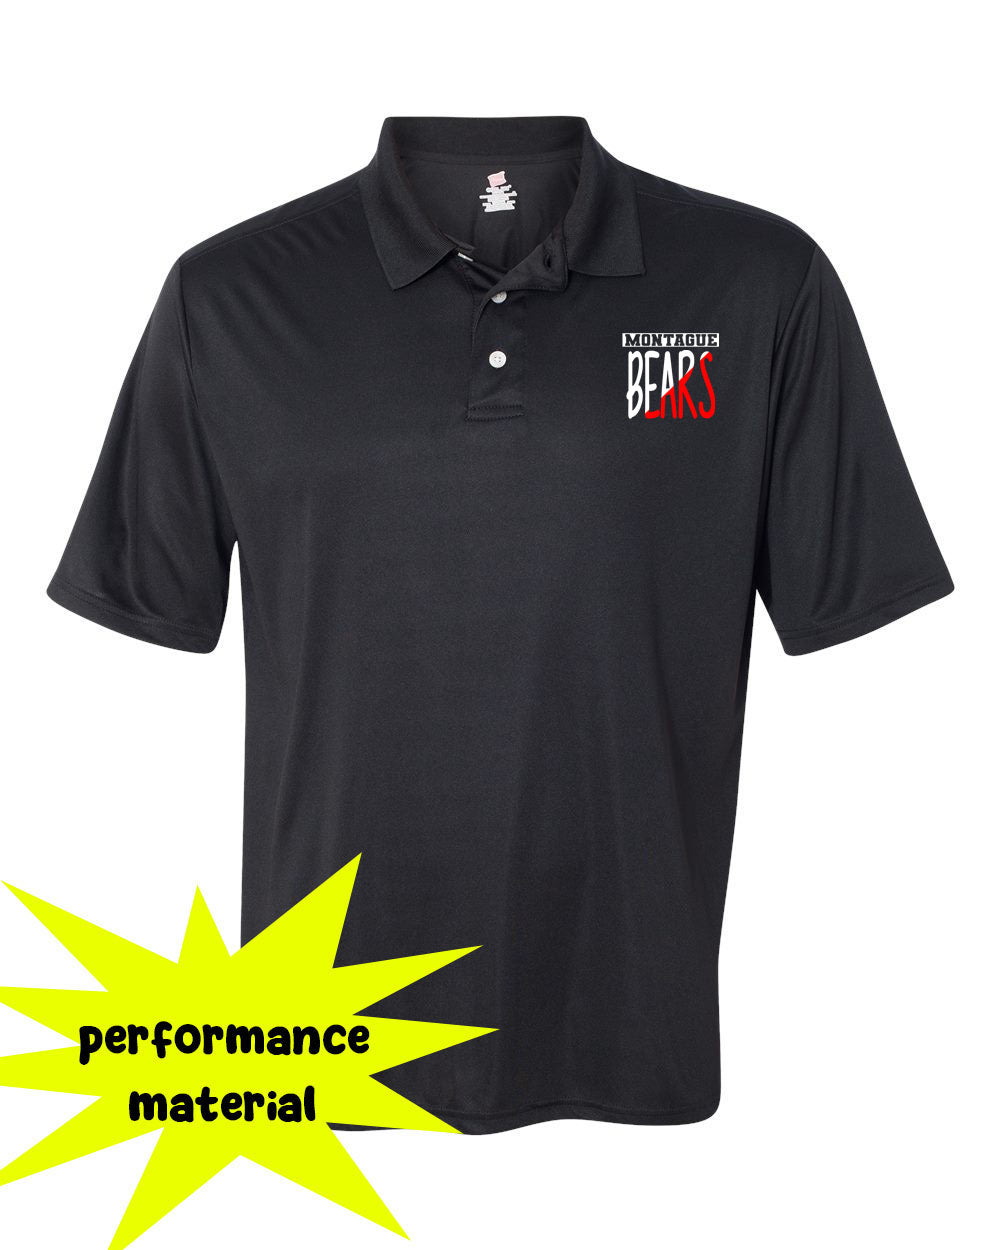 Montague Design 7 Performance Material Polo T-Shirt